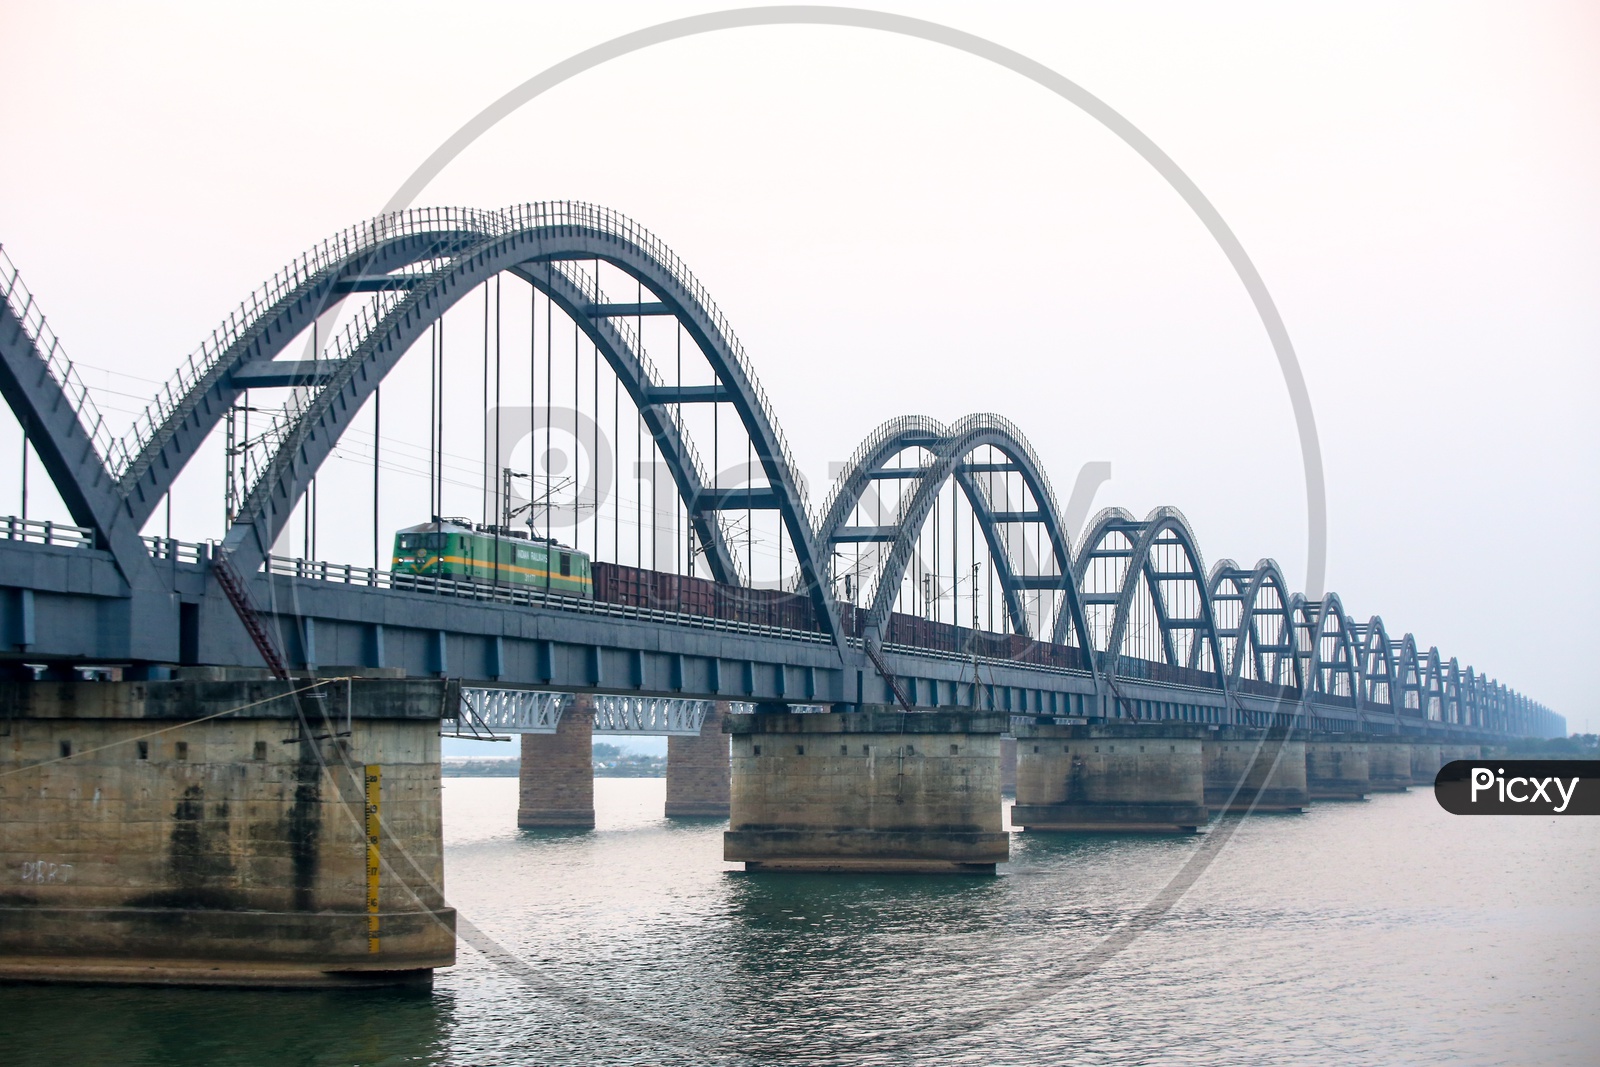 Rajahmundry Arch Bridge  On Godavari River With a Moving train